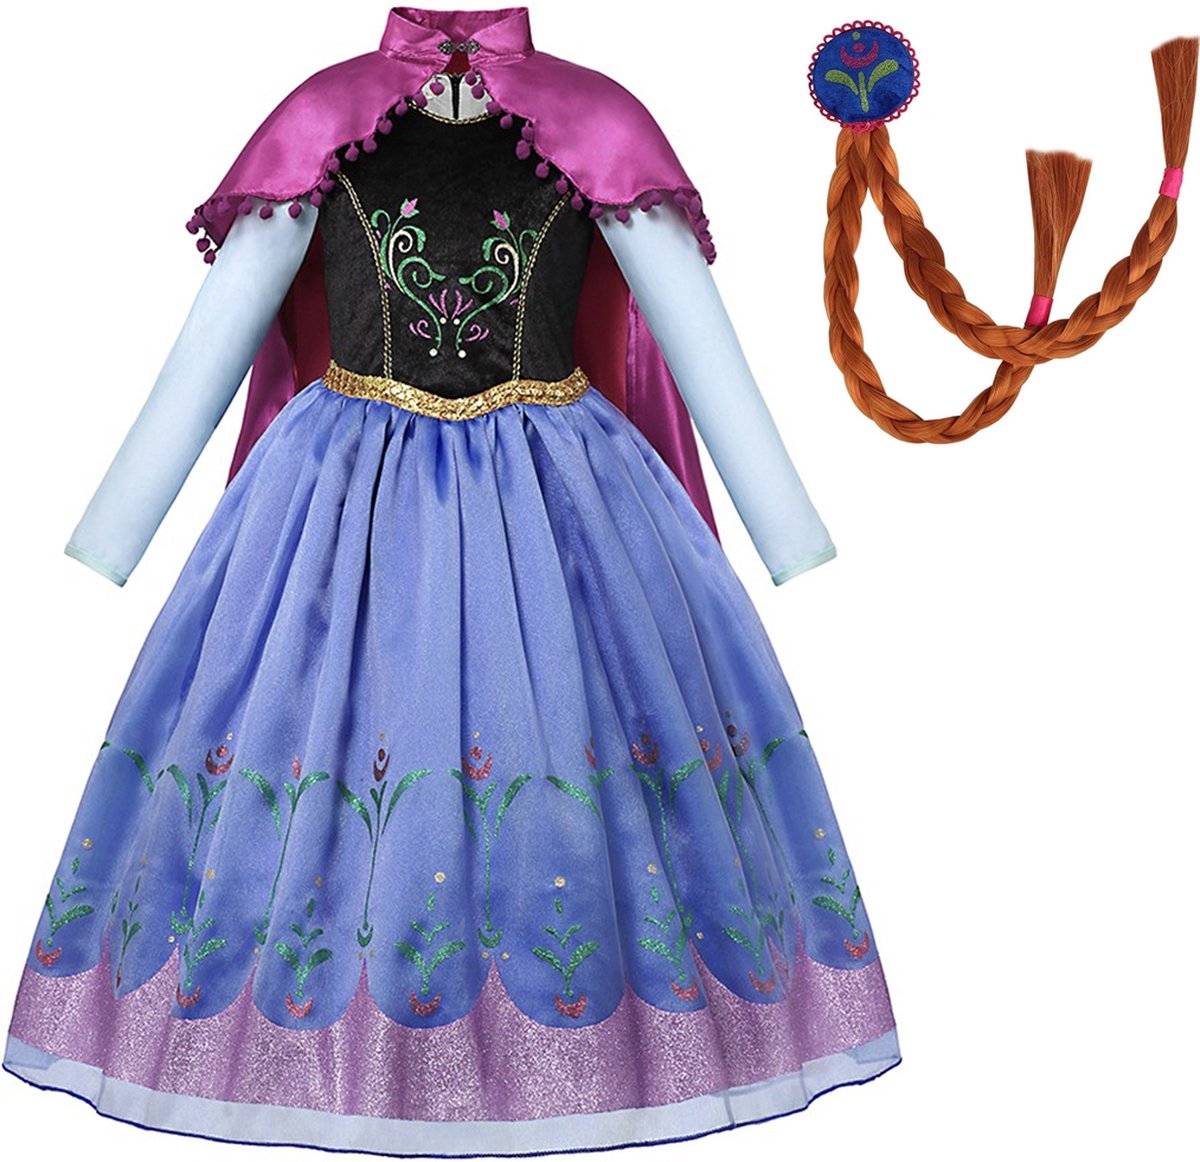 Prinsessenjurk meisje - Prinsessen speelgoed - verkleedkleding meisje - Het Betere Merk - Lange roze cape - Haarvlecht - Maat 122/128 (130) - Carnavalskleding - Cadeau meisje - Verkleedkleren - Kleed